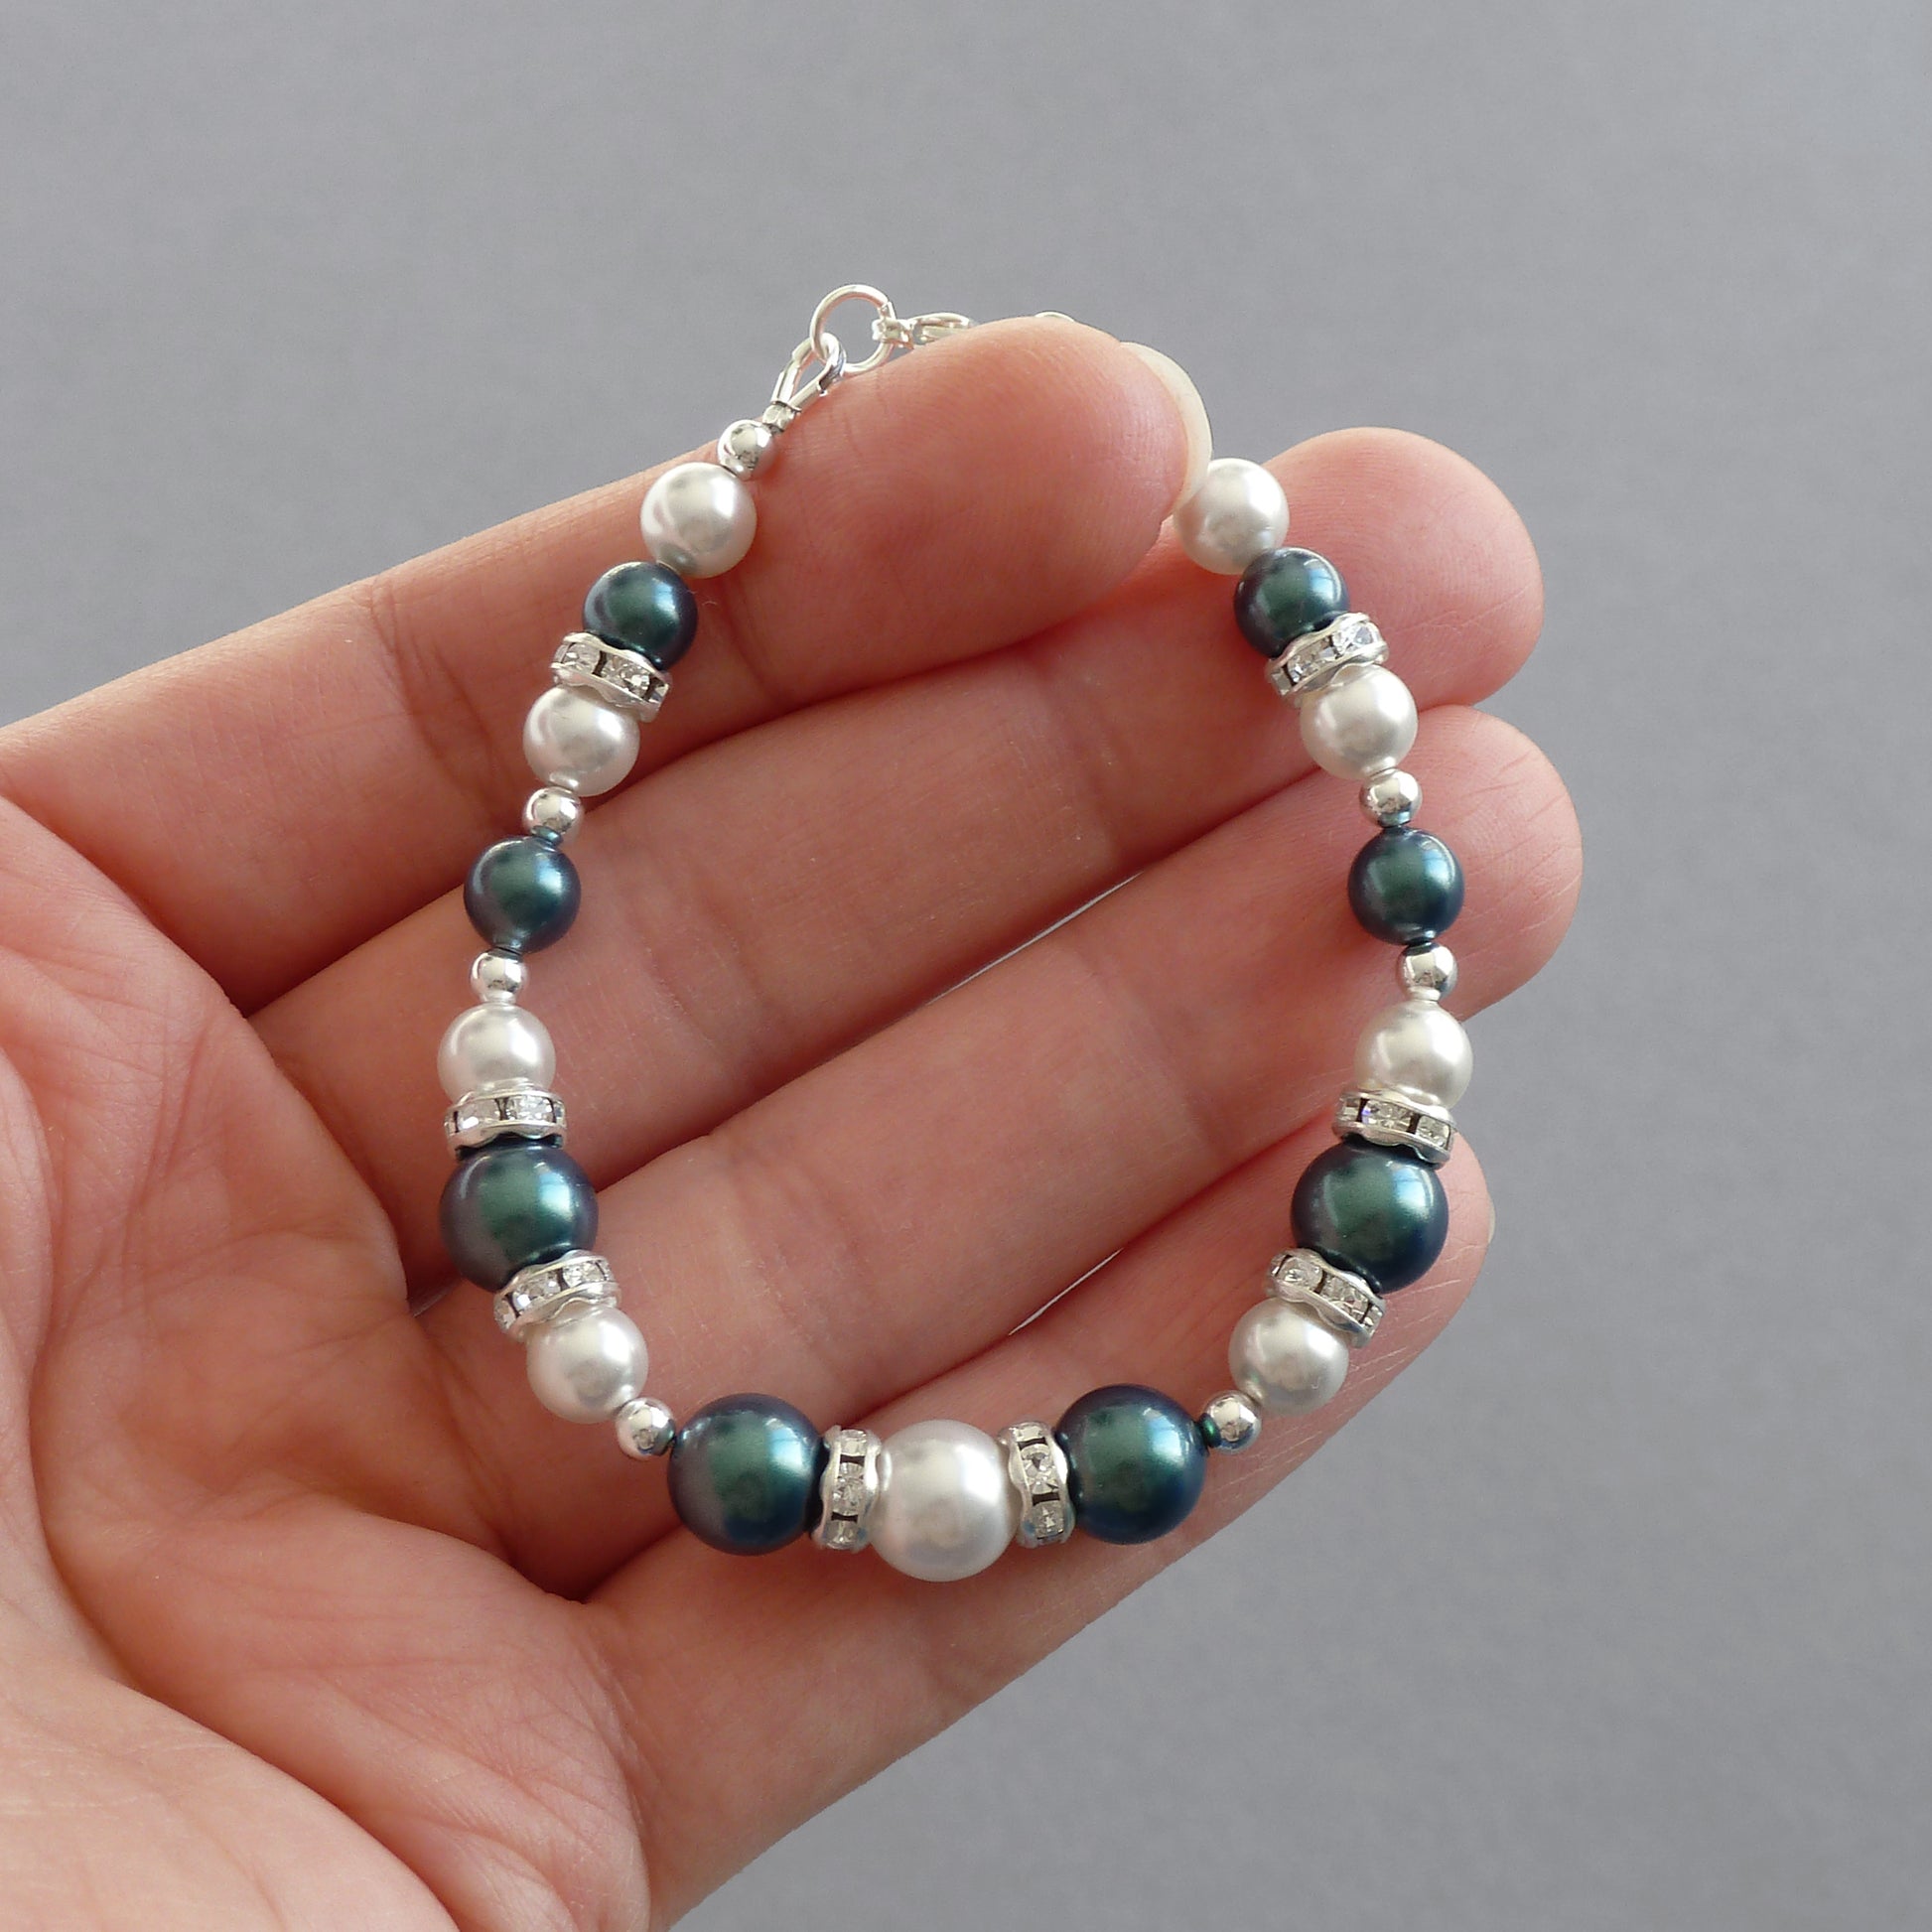 Petrol blue and white pearl bracelet